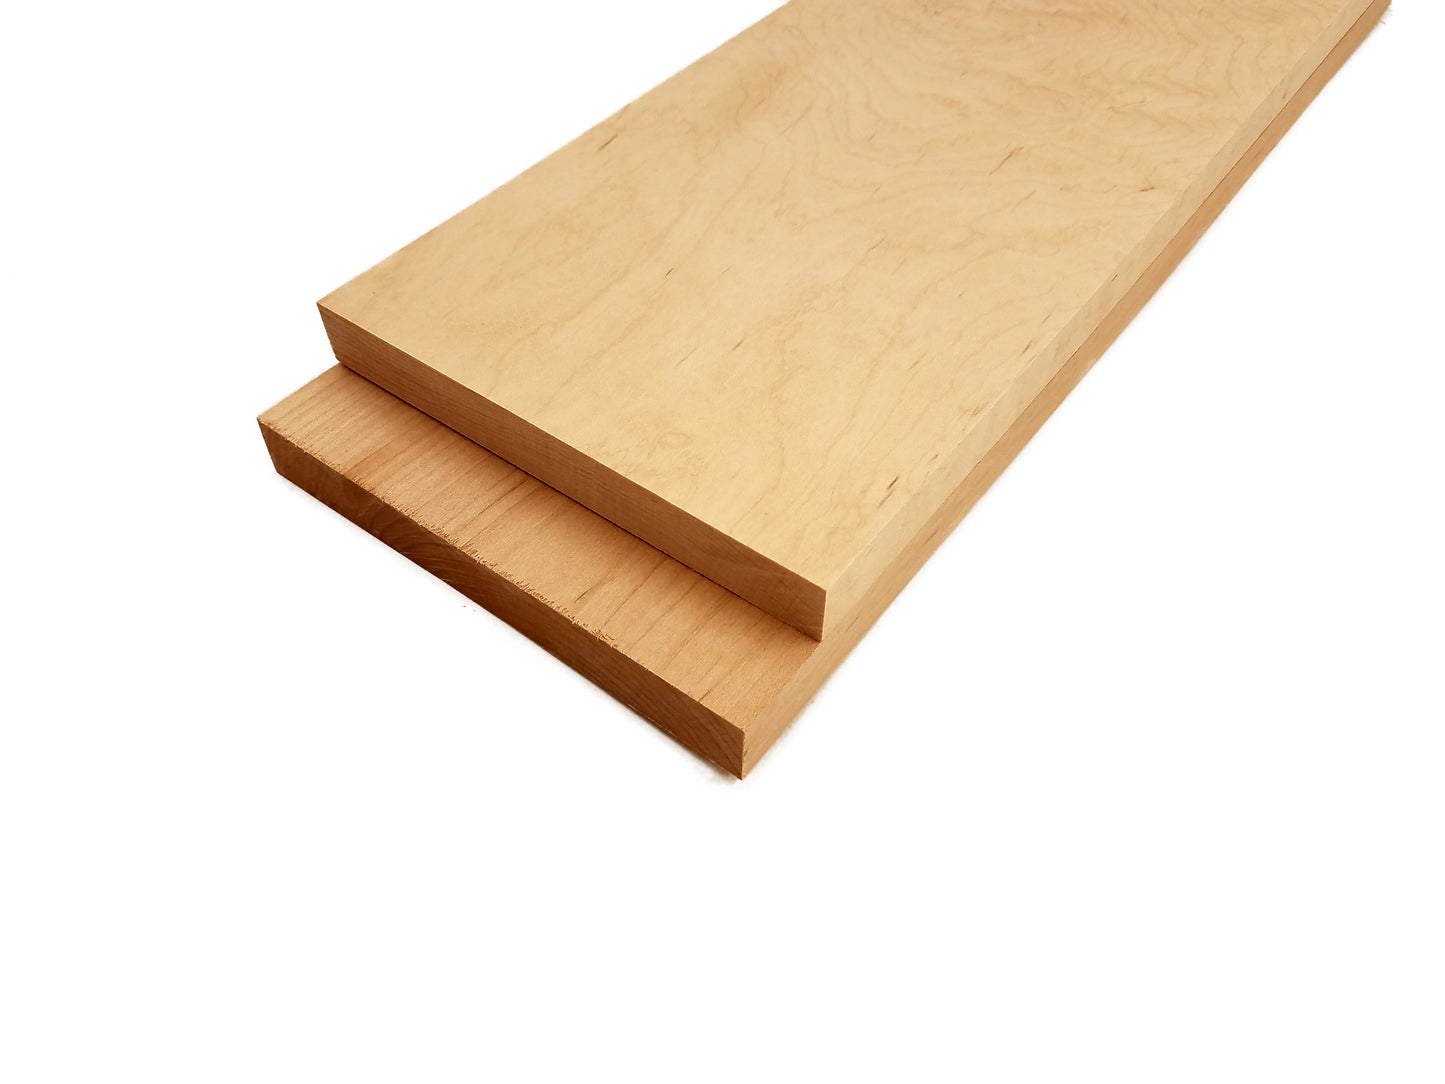 Maple Lumber Board - 3/4" x 6" (2 Pcs)